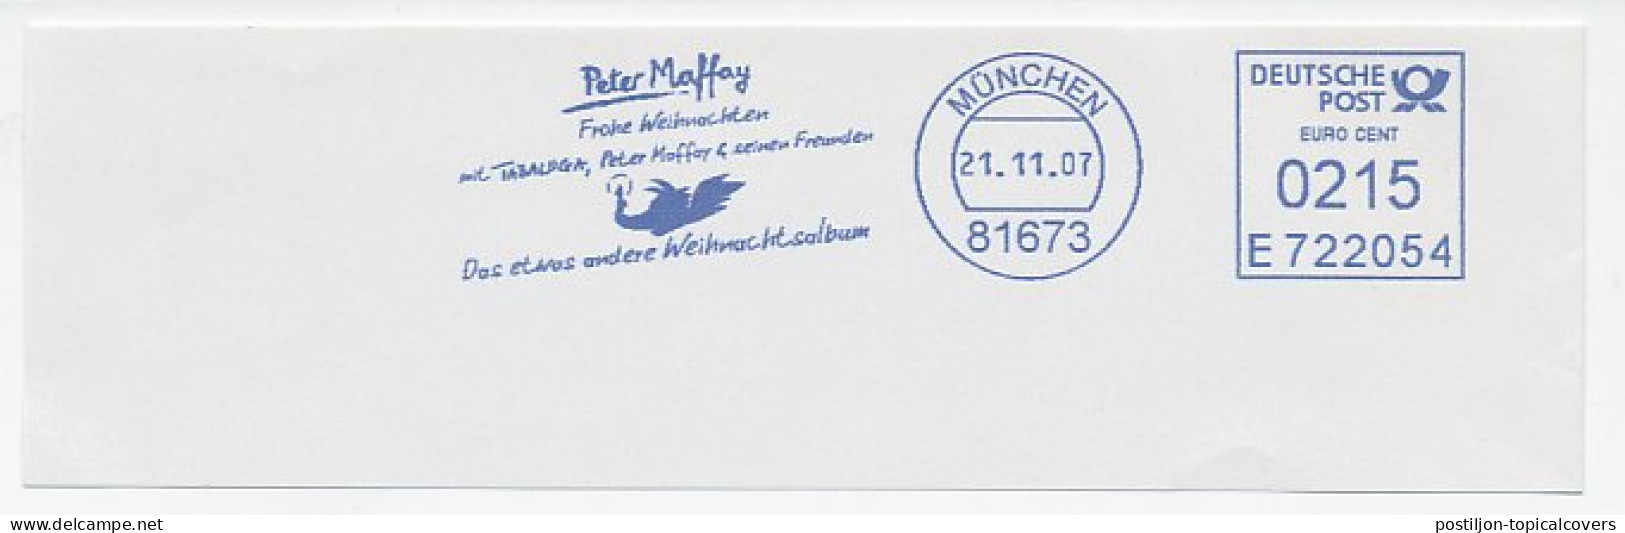 Meter Cut Germany 2007 Peter Maffay - Christmas Album - Musique